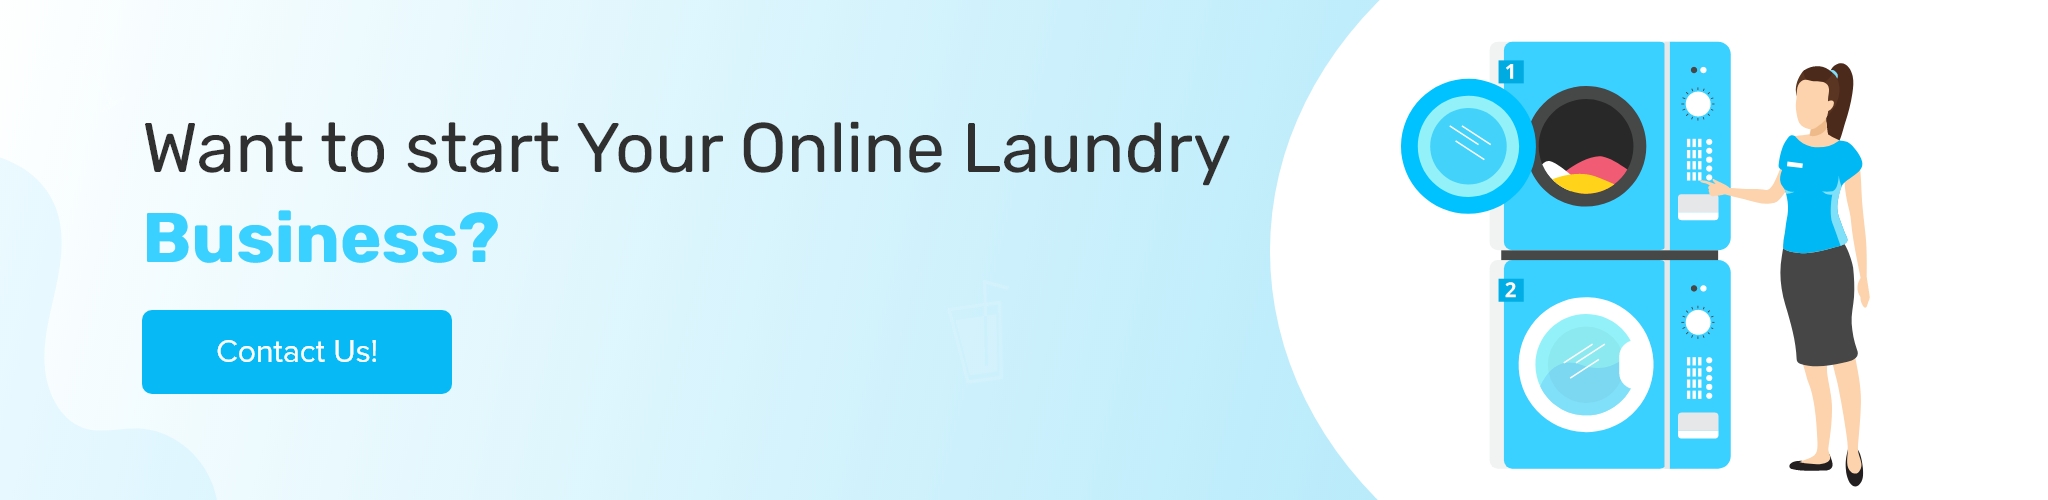 laundry app development - cta